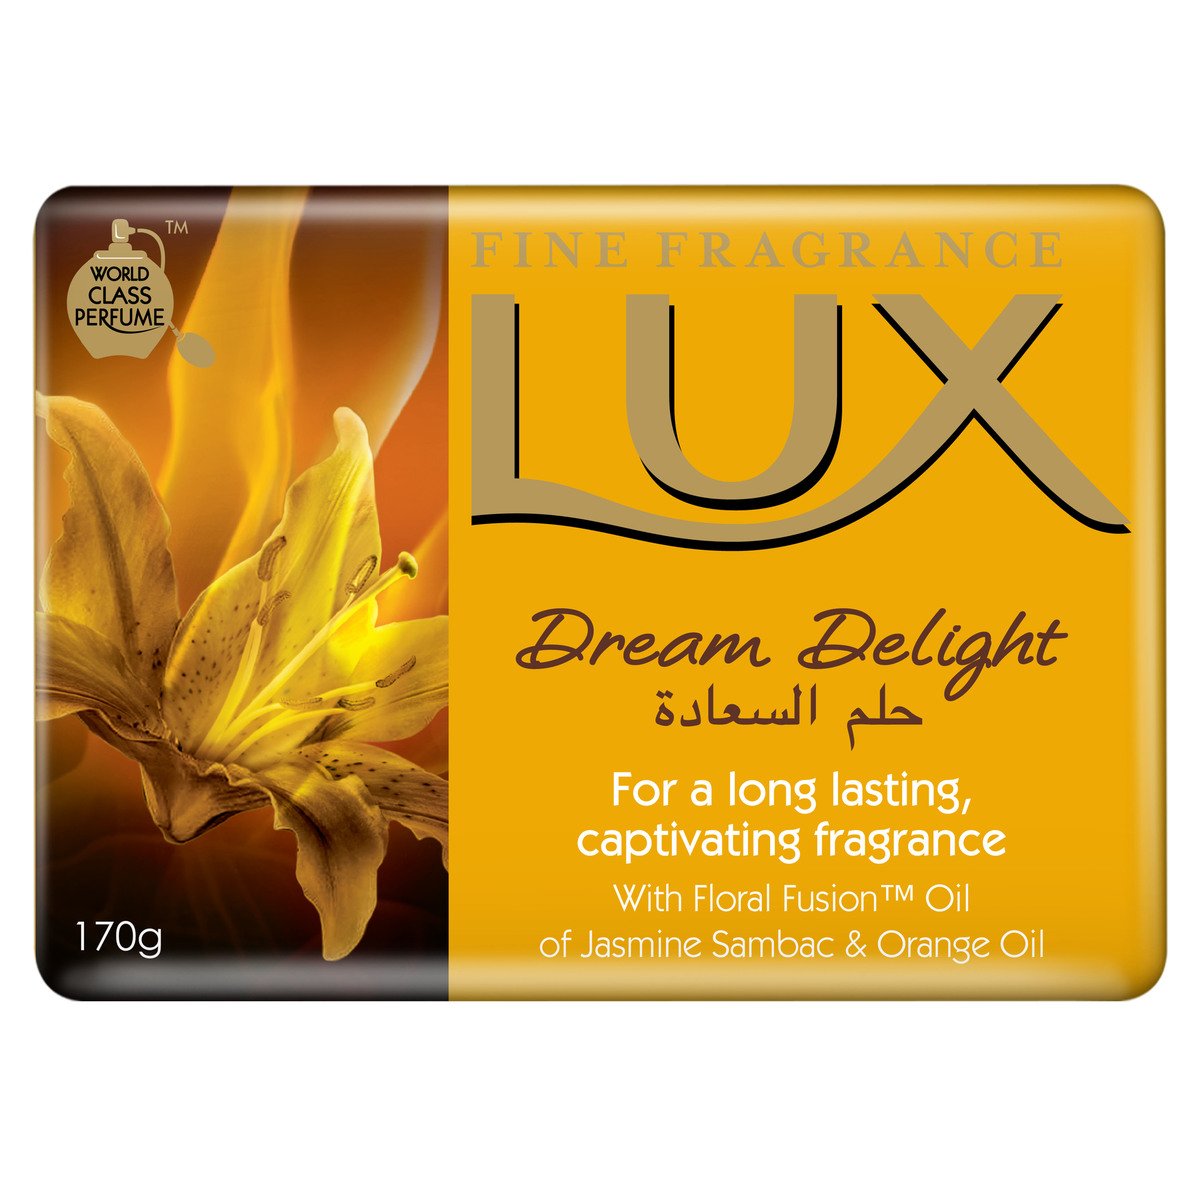 Lux Dream Delight Long Lasting Soap 170 g